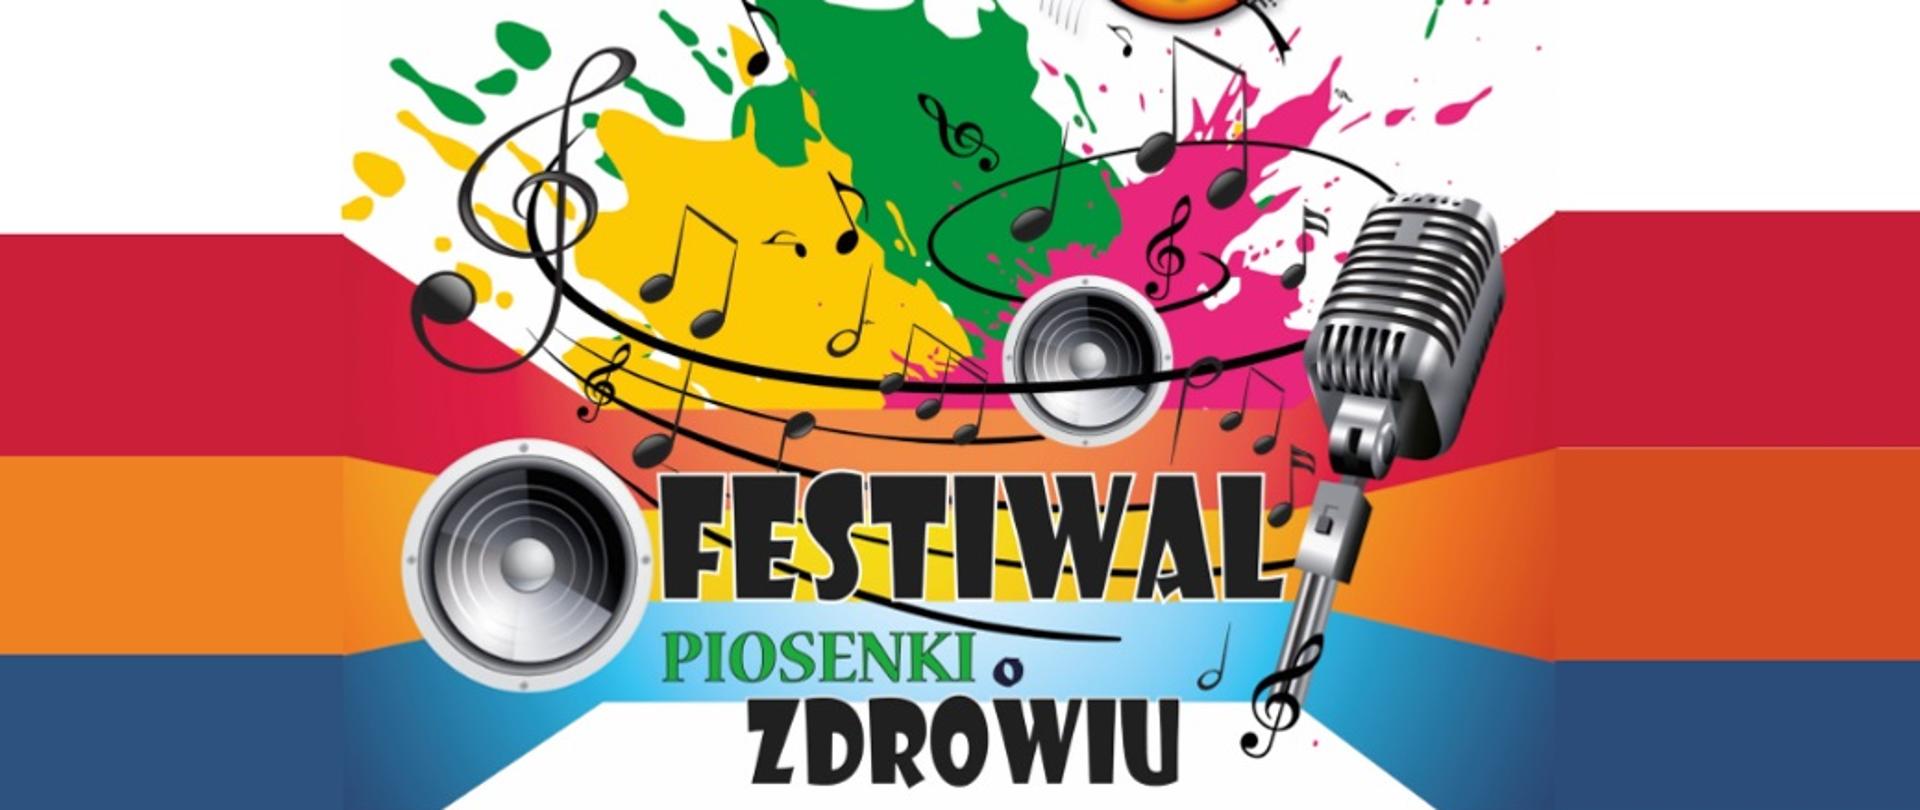 Festiwal_piosenki_o_zdrowiu